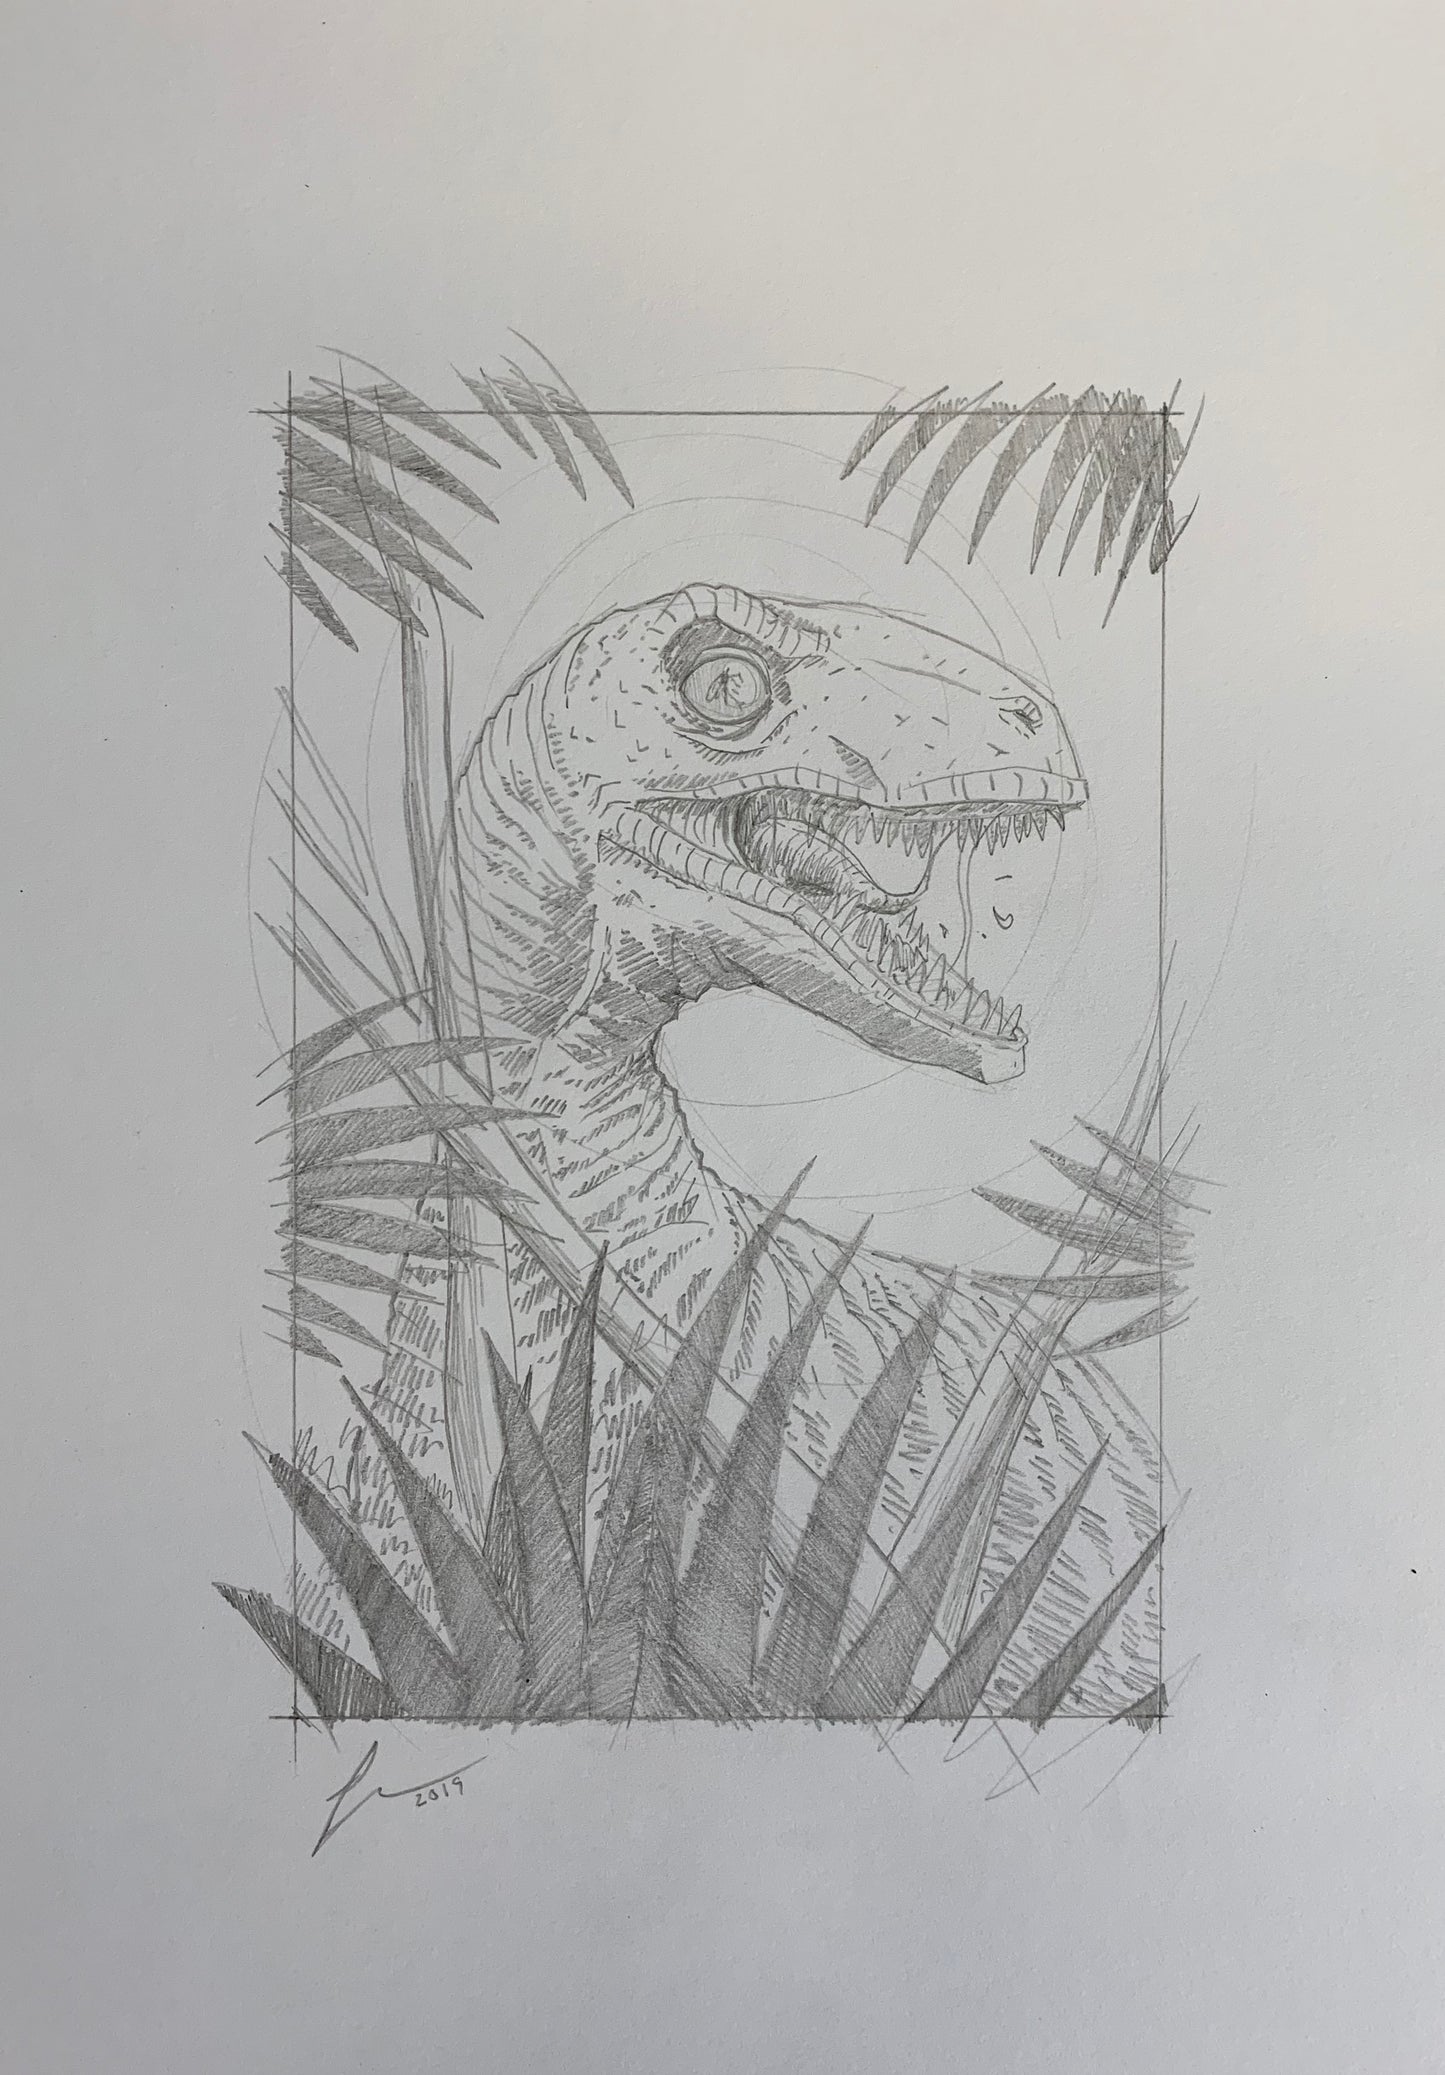 Florey "Jurassic Park Concept Sketch"